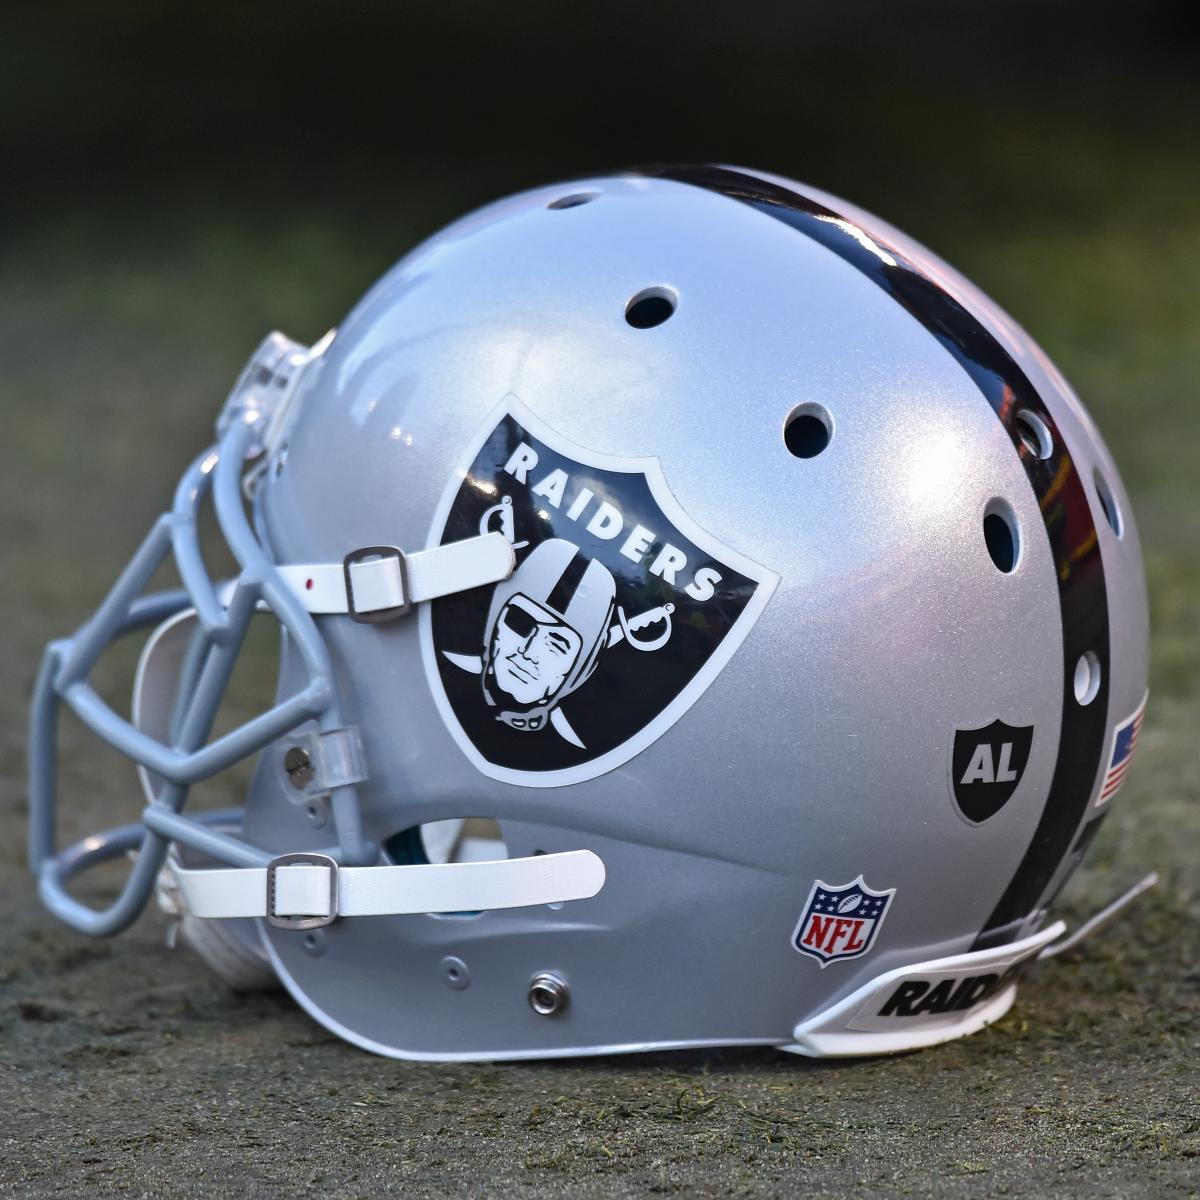 Oakland Raiders' Draft Picks Results, Analysis and Grades News